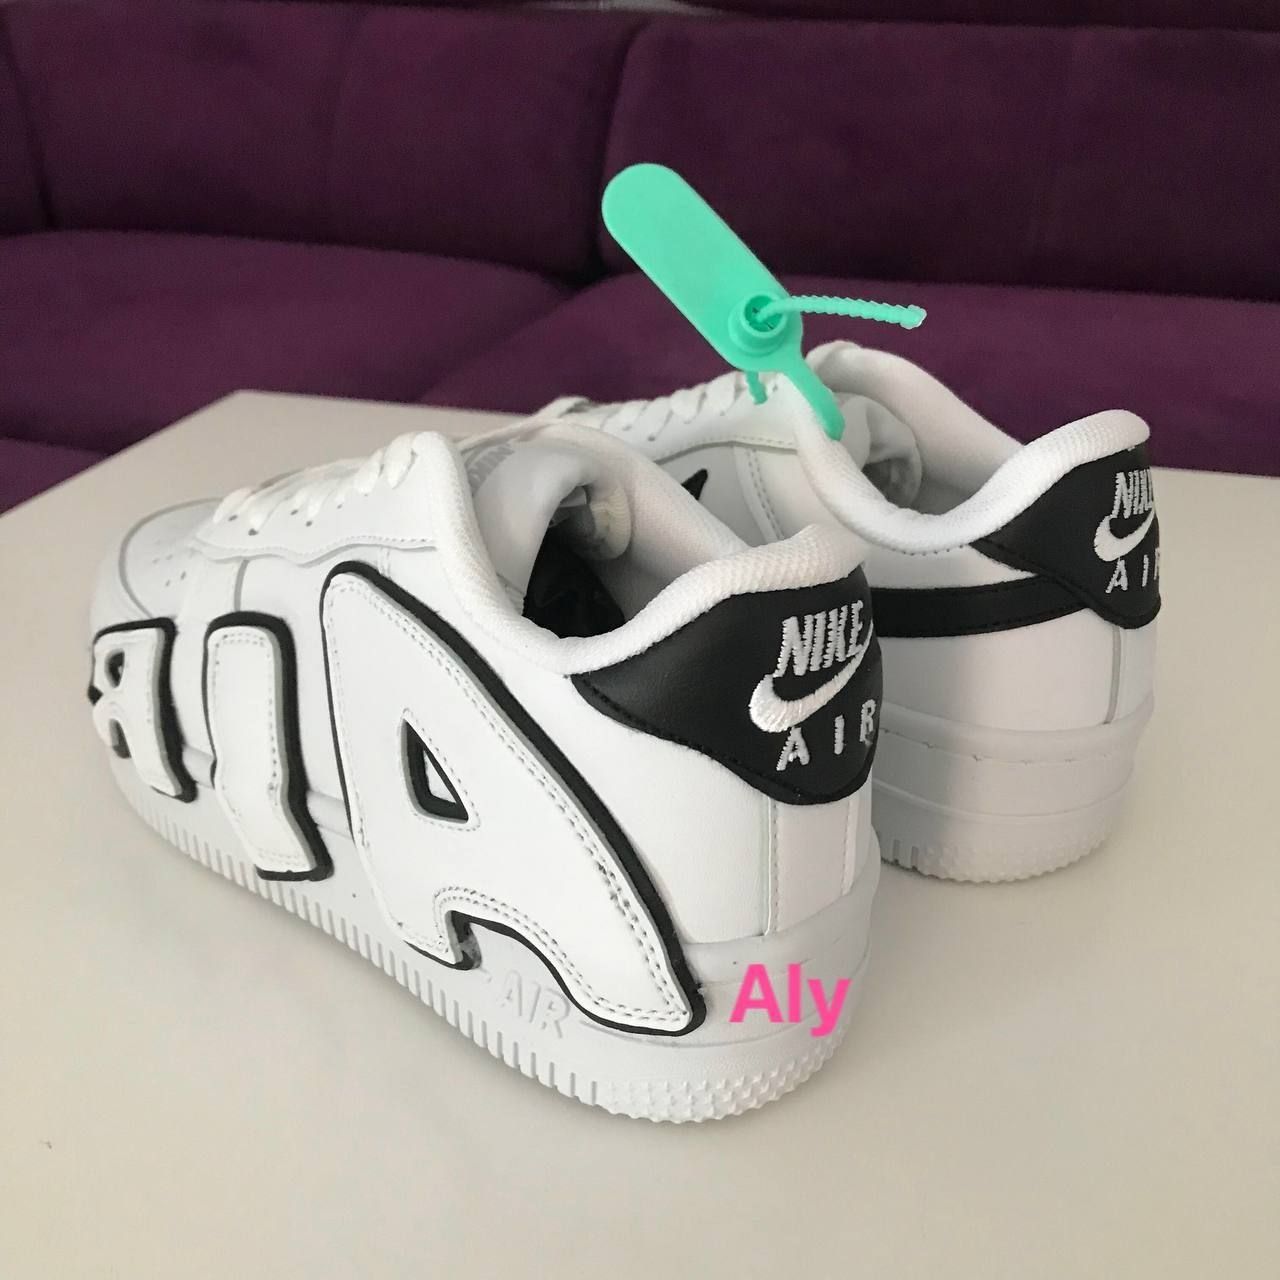 adidasi Nike Air dama